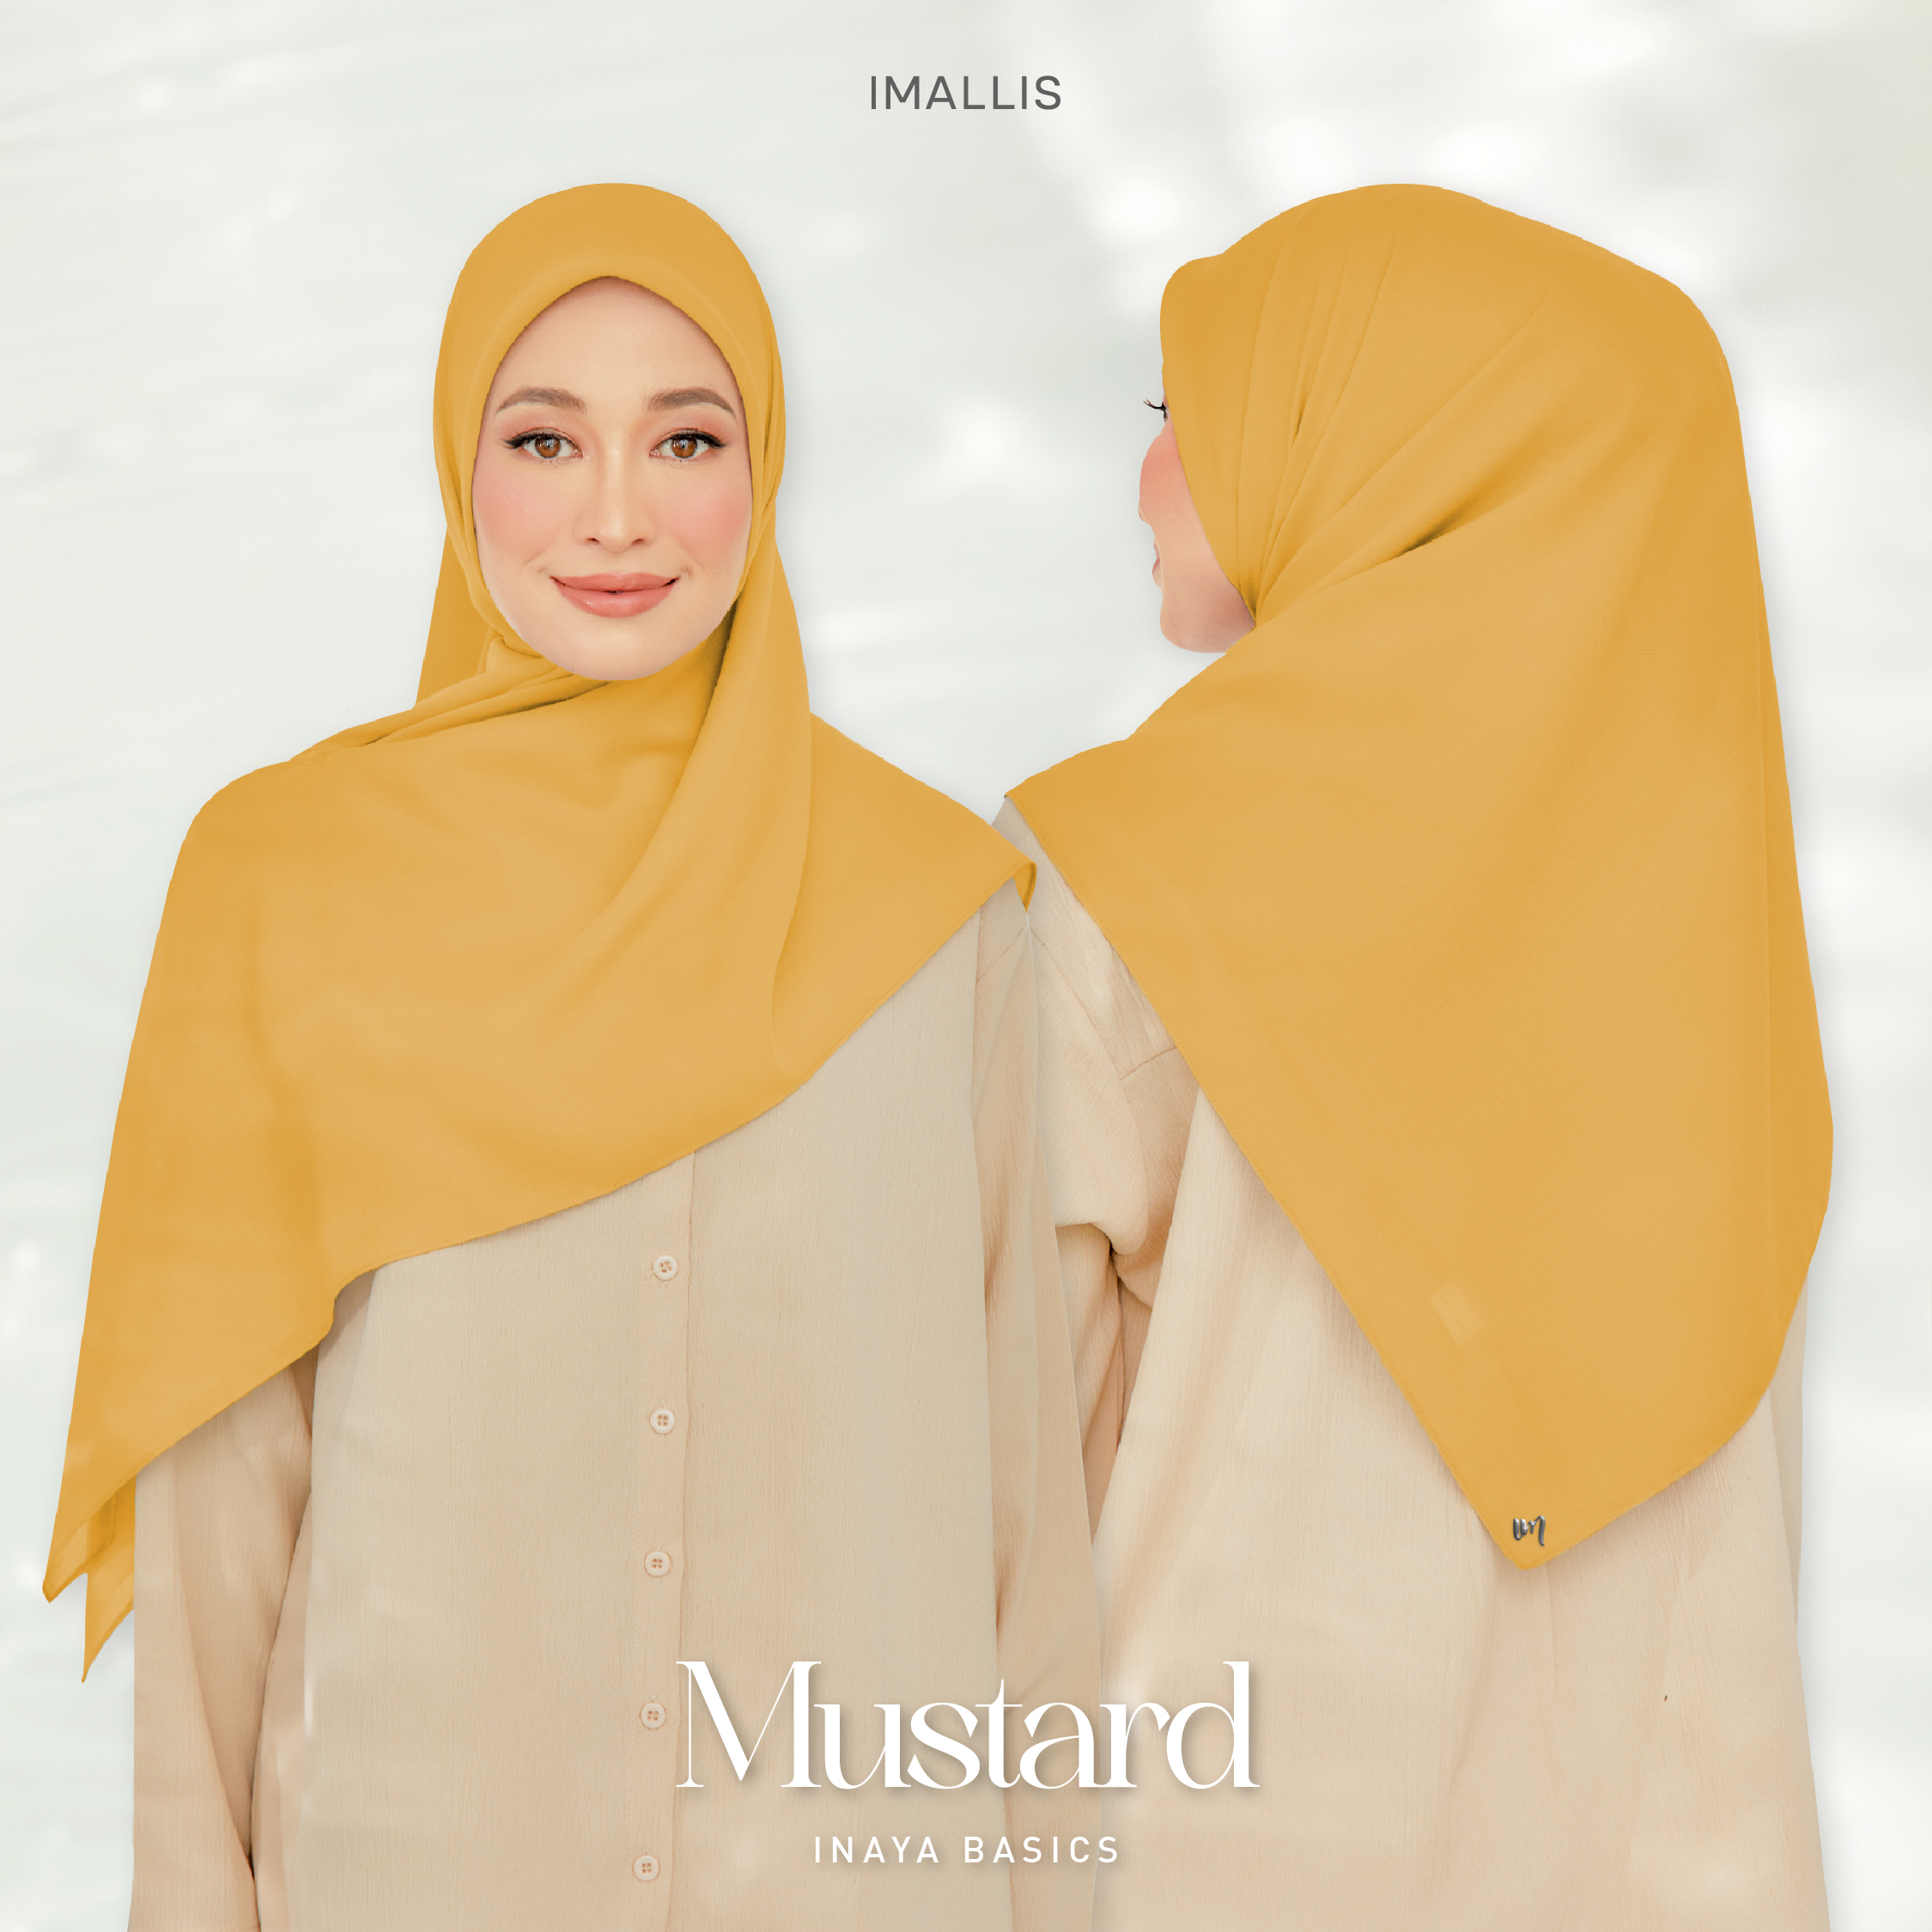 Inaya Basics - Mustard-01